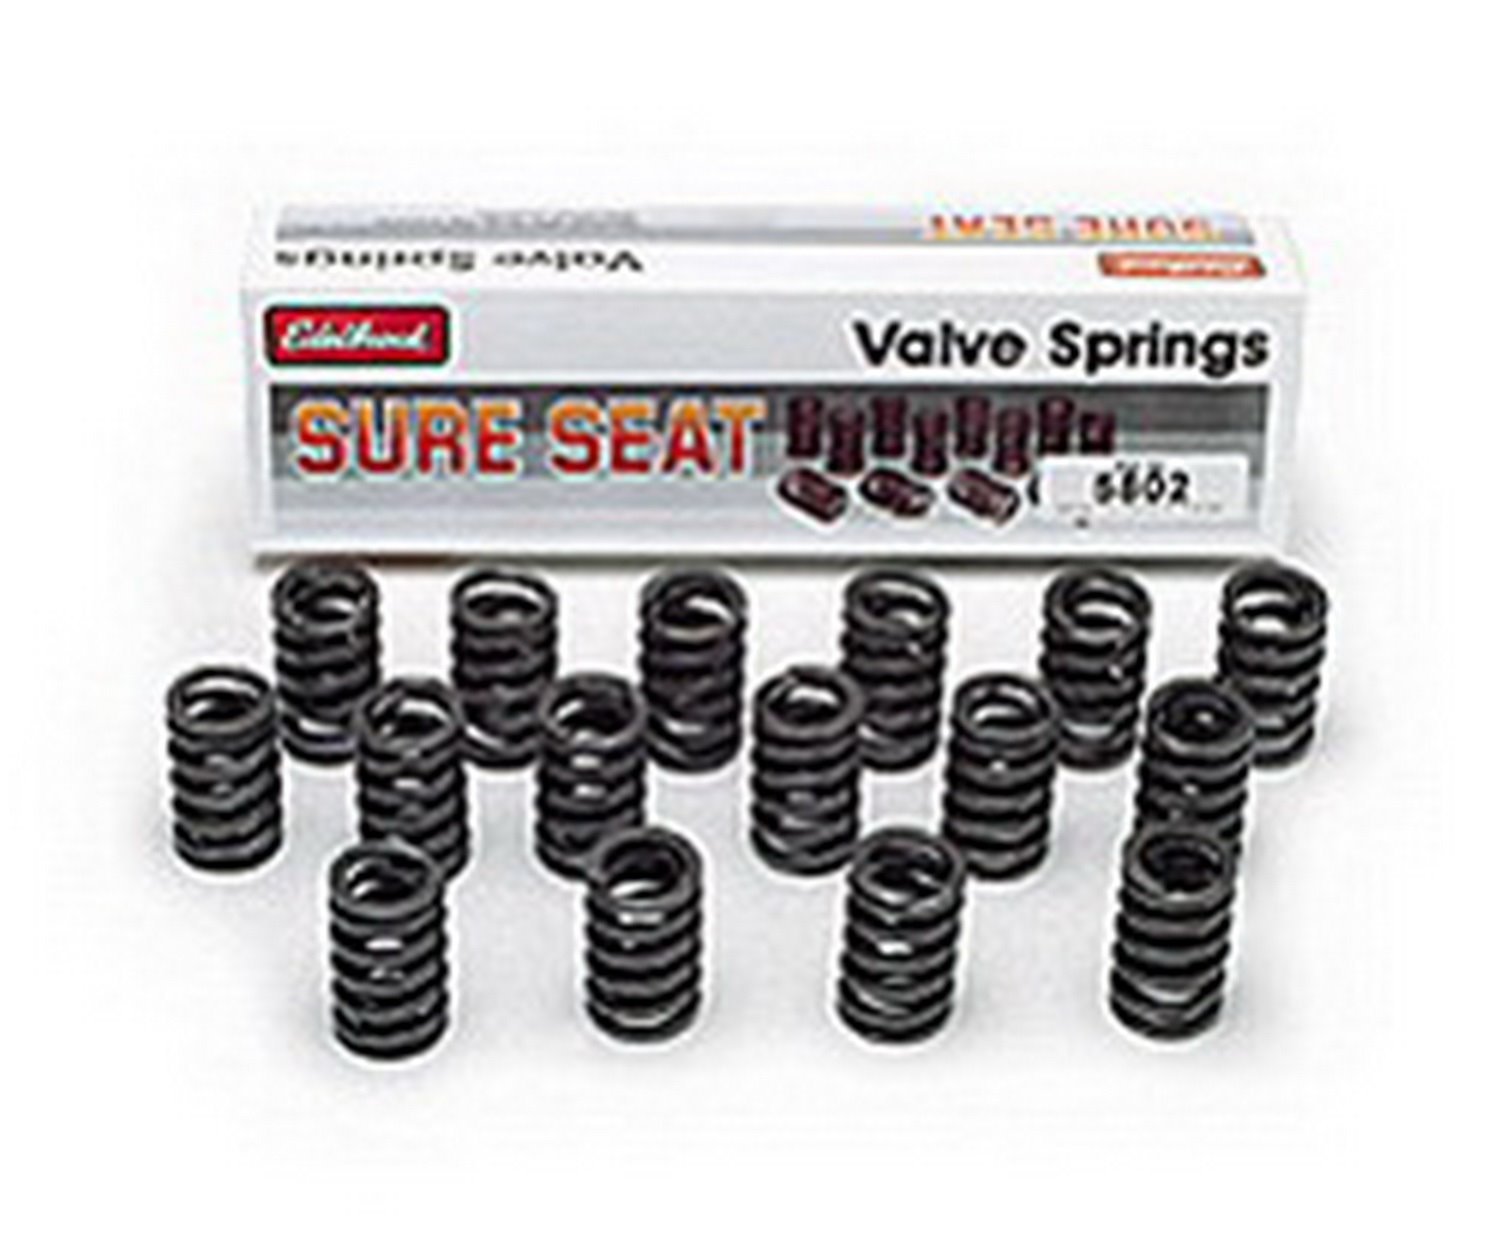 Sure Seat Replacement Valve Springs for Edelbrock Aluminum